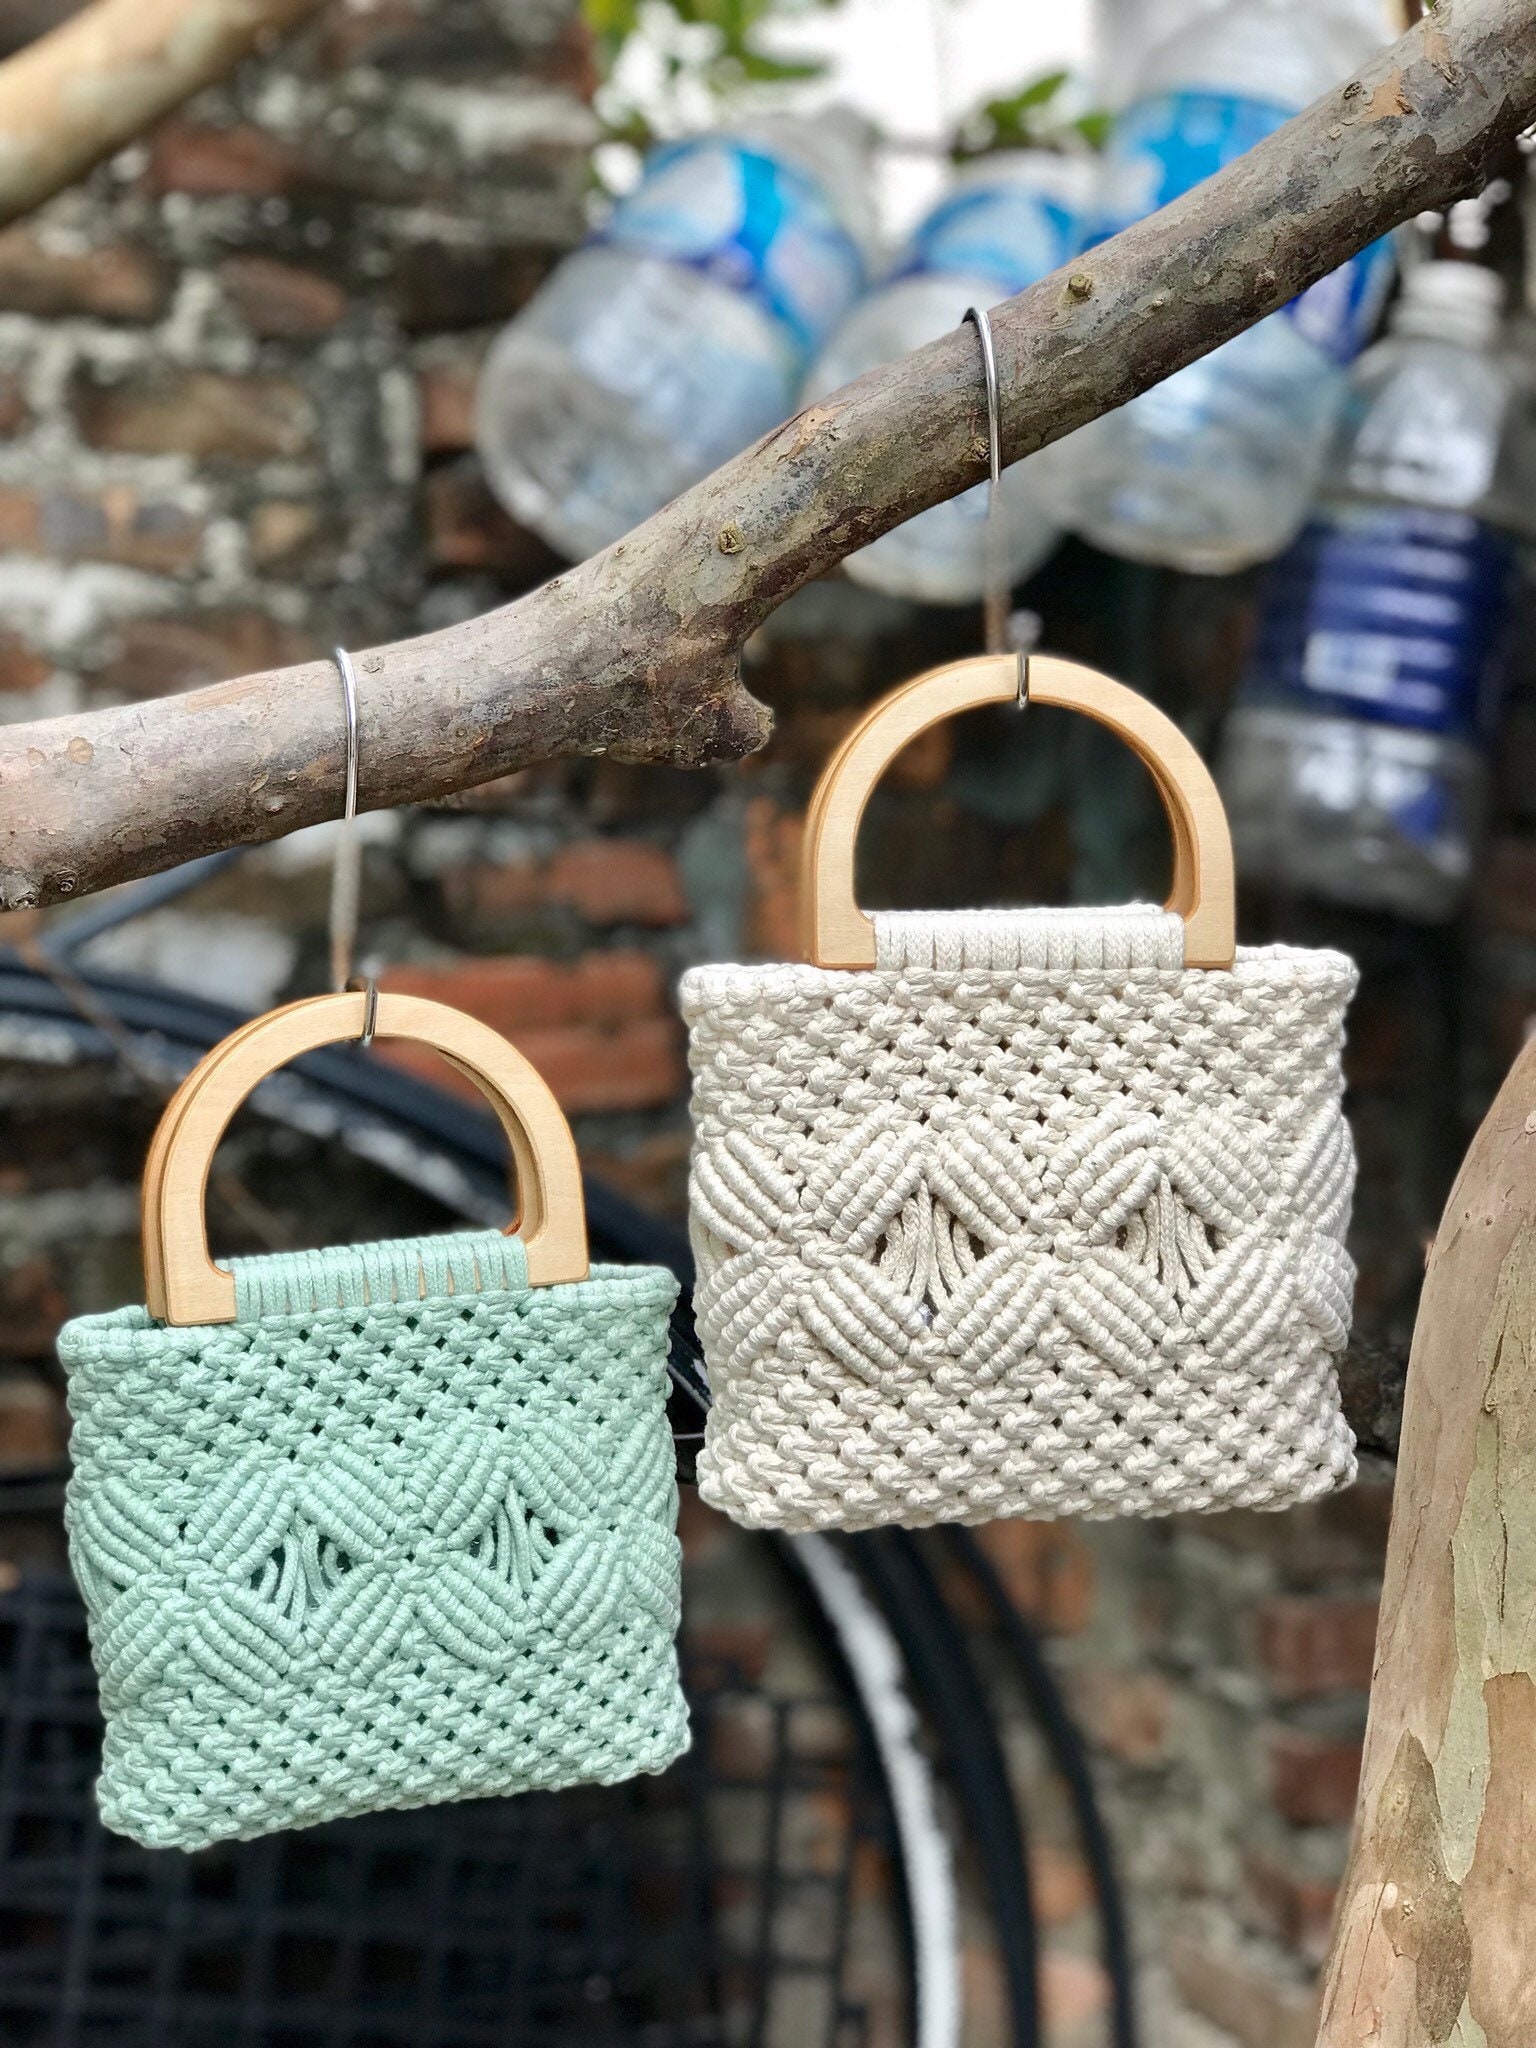 Amazon.com: PH PandaHall 3 Sizes D Shape Handbag Handles, 6pcs Clear Handles  Replacement Decorative Purse Handle Plastic Bag Handle for Straws Beach Handbags  Macrame Crocheted Purse Making